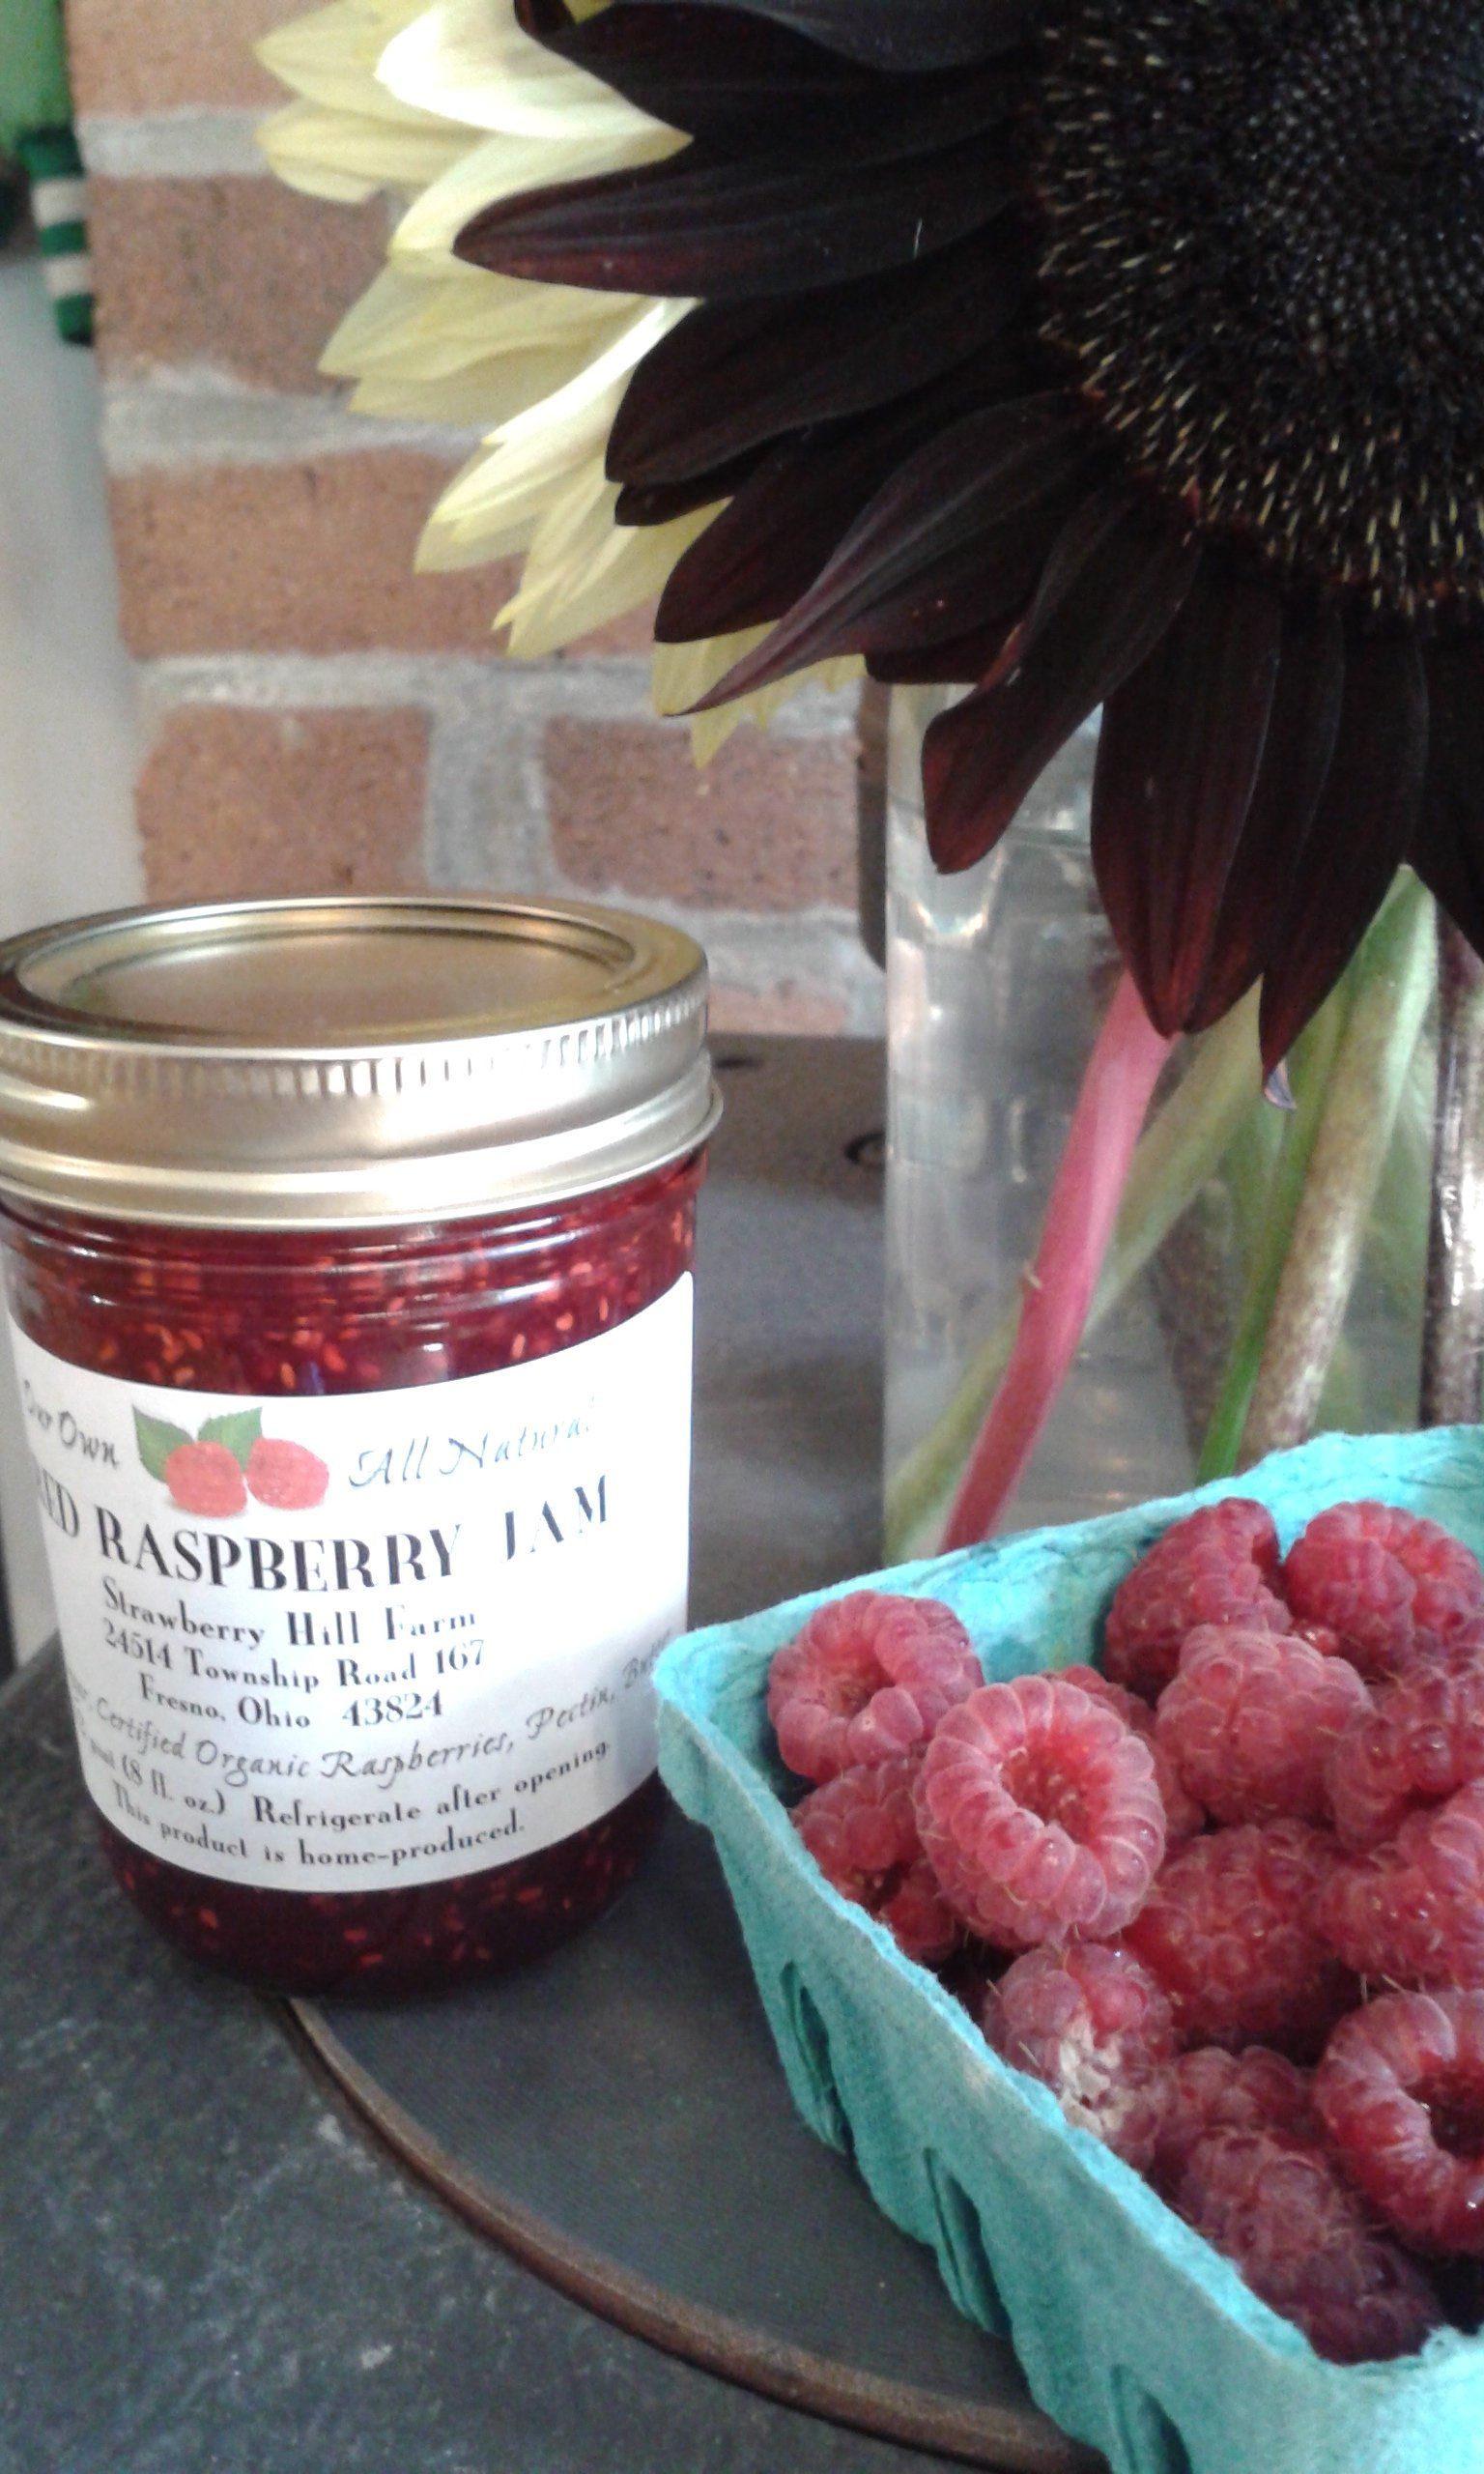 Next Happening: Raspberry Jam Is in Stock!